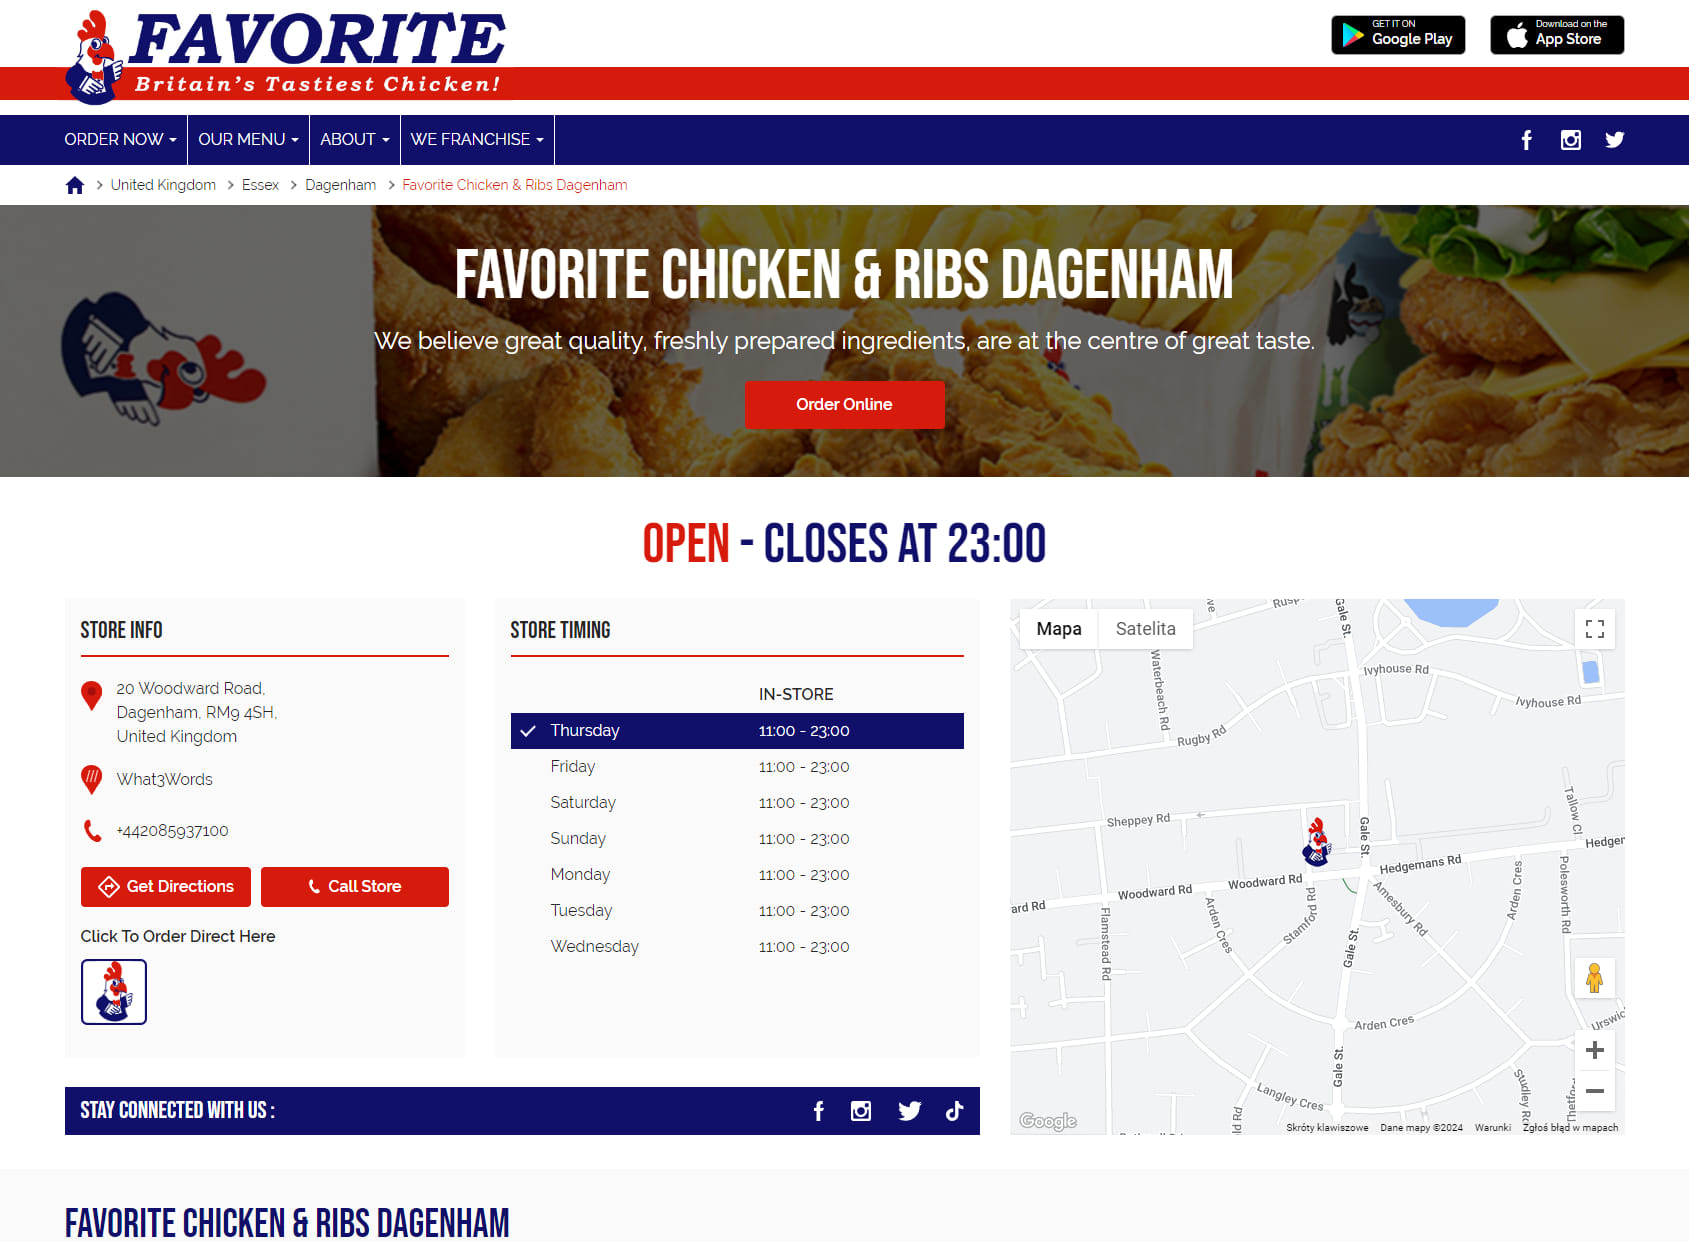 Favorite Chicken & Ribs Dagenham